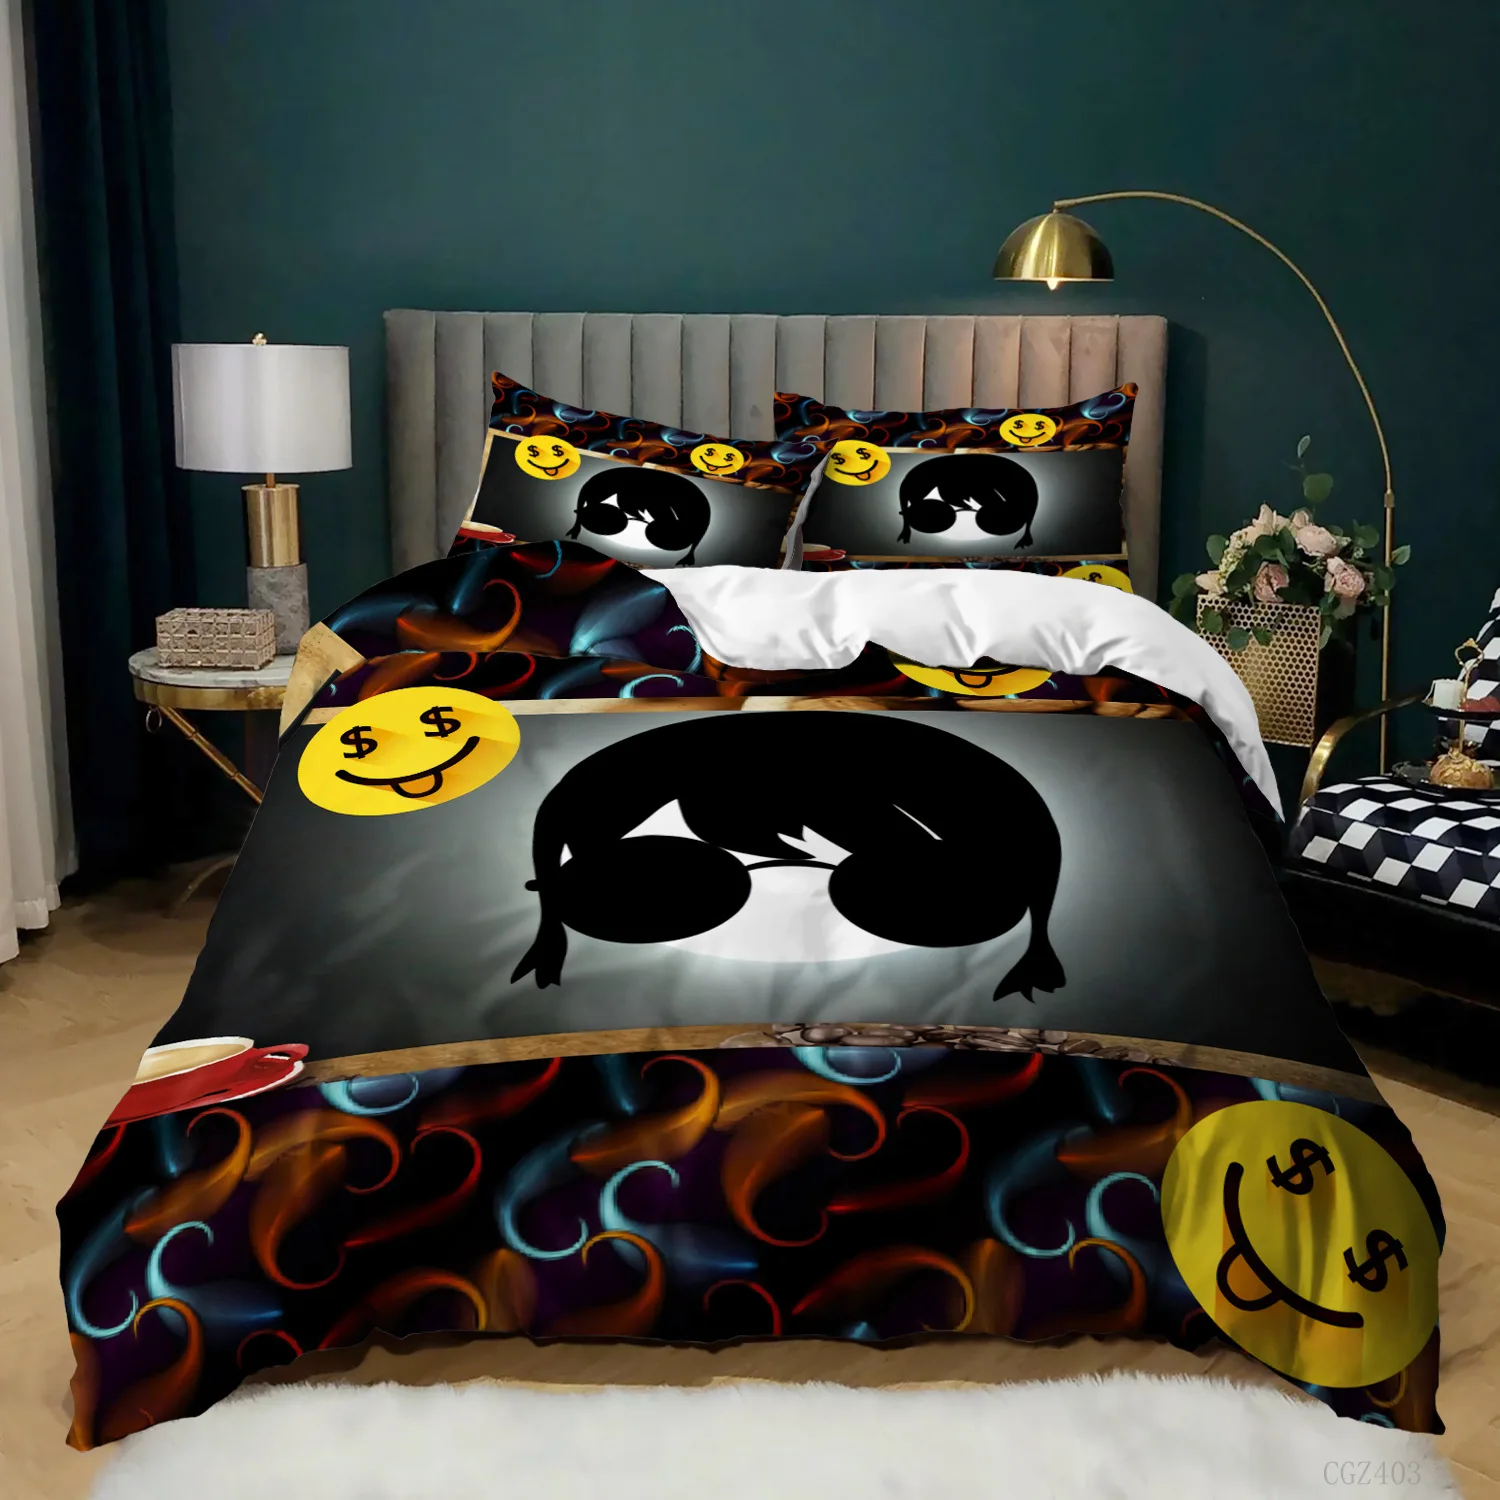 Kids Catoon Bedding Set Cute Duvet Cover Set Teens Boys Comforter Quilt Cover&Pillowcase for Bedroom Decor Housse De Couette images - 6